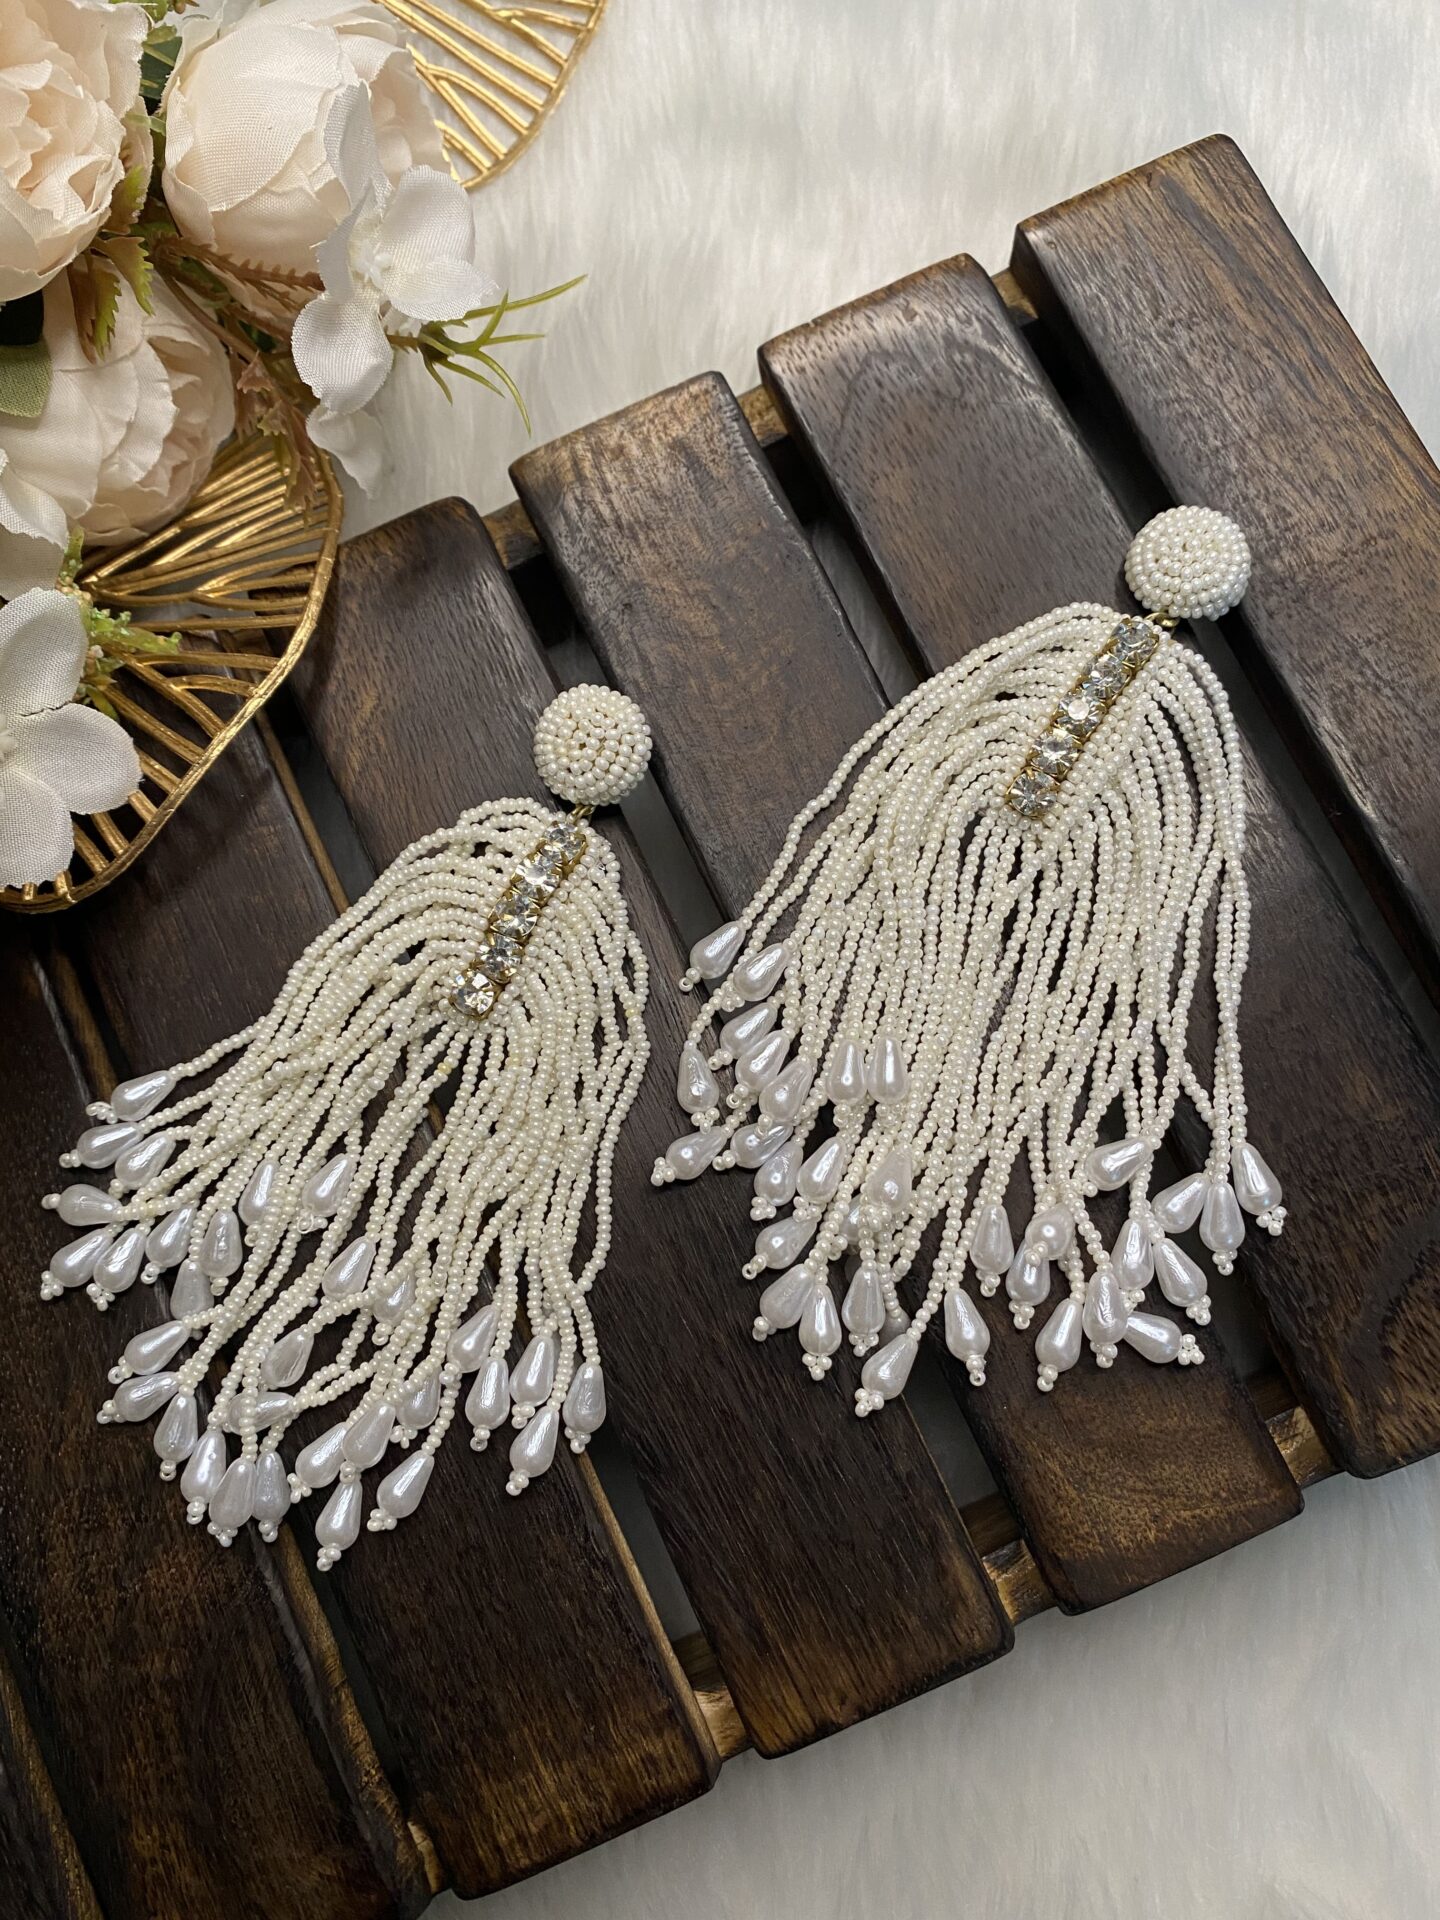 White Bead Tassel Earrings – All About Her